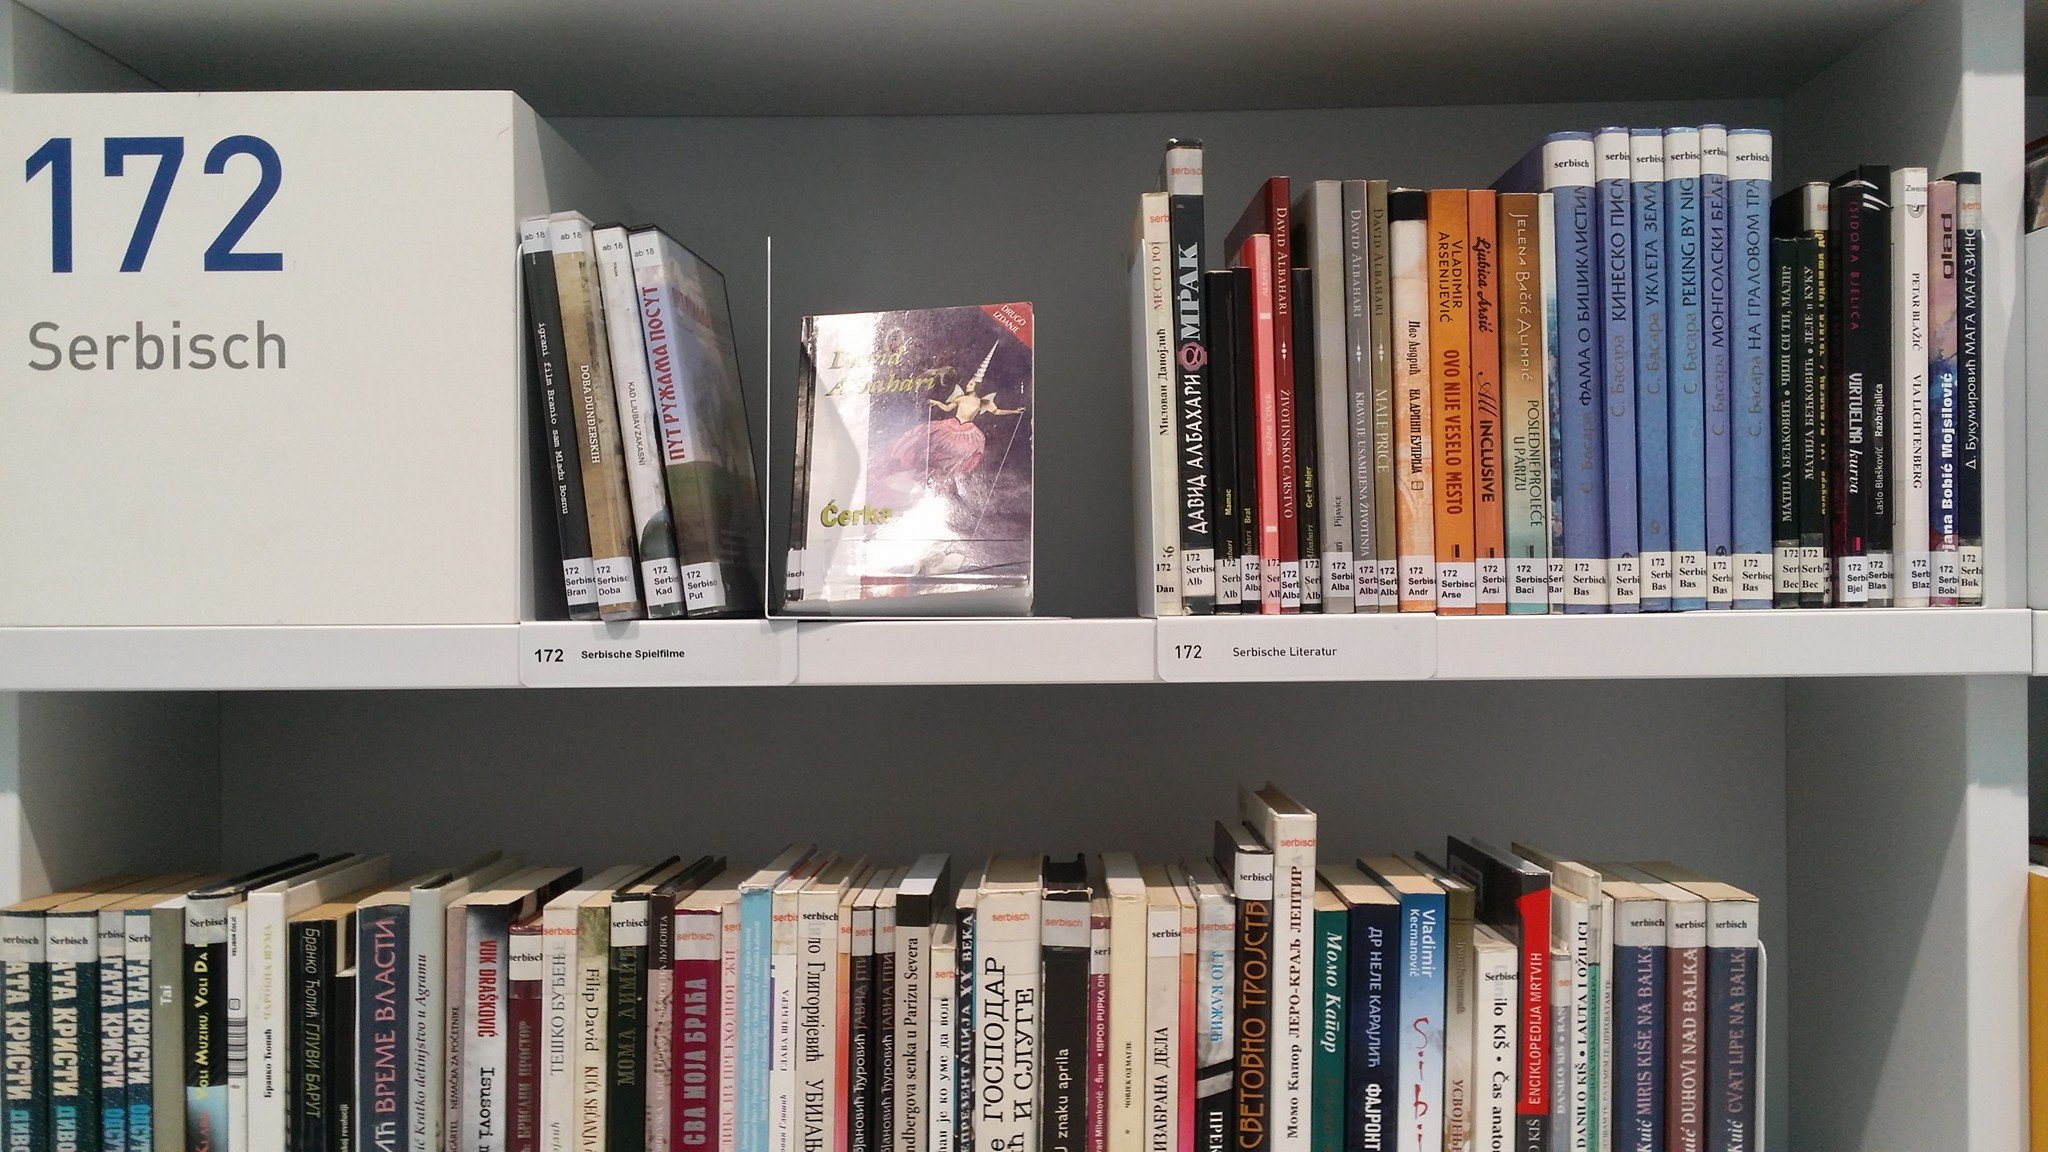 Postoje i police sa knjigama na srpskom, izbor knjige je zavidan / foto: Miljan Tanić